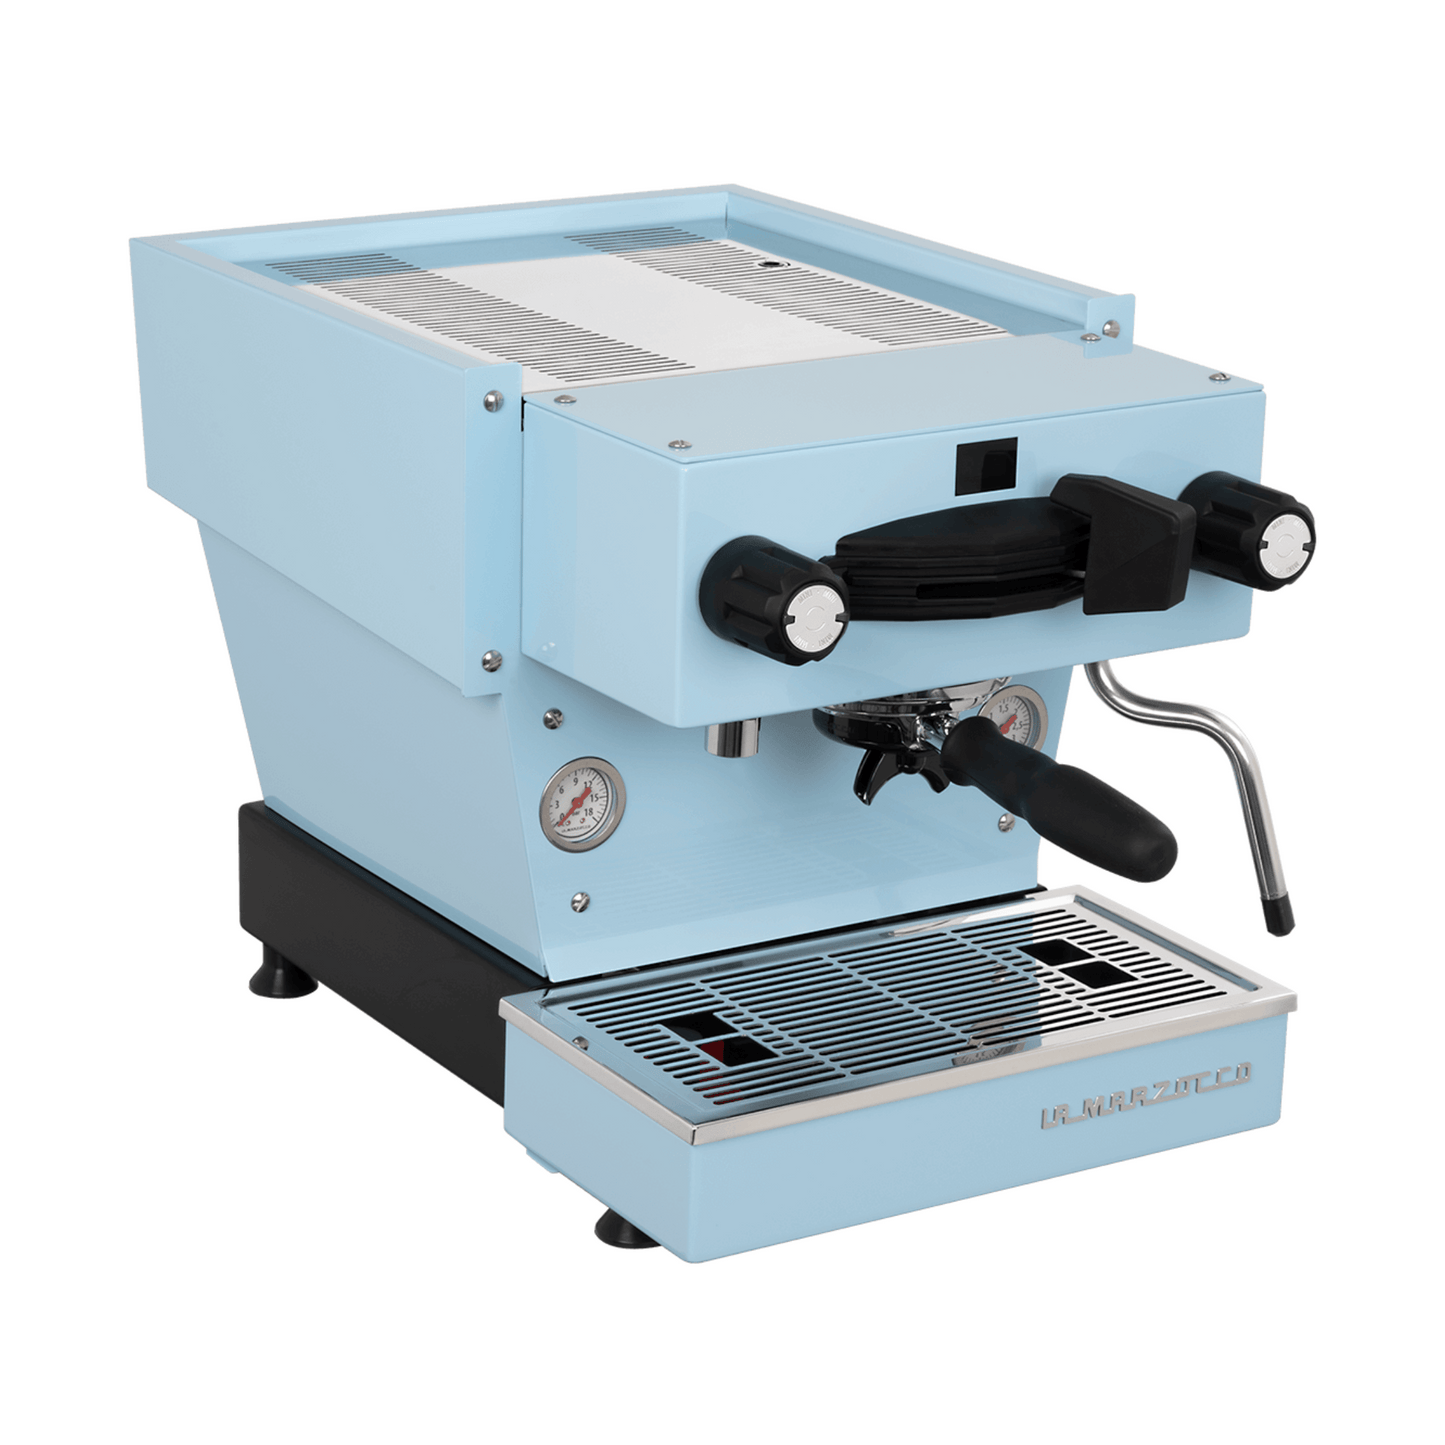 La Marzocco Linea Mini R Espresso Machine, Multiple Colours, Dual Boilers, Thermal Stability System, PID control, Connected App